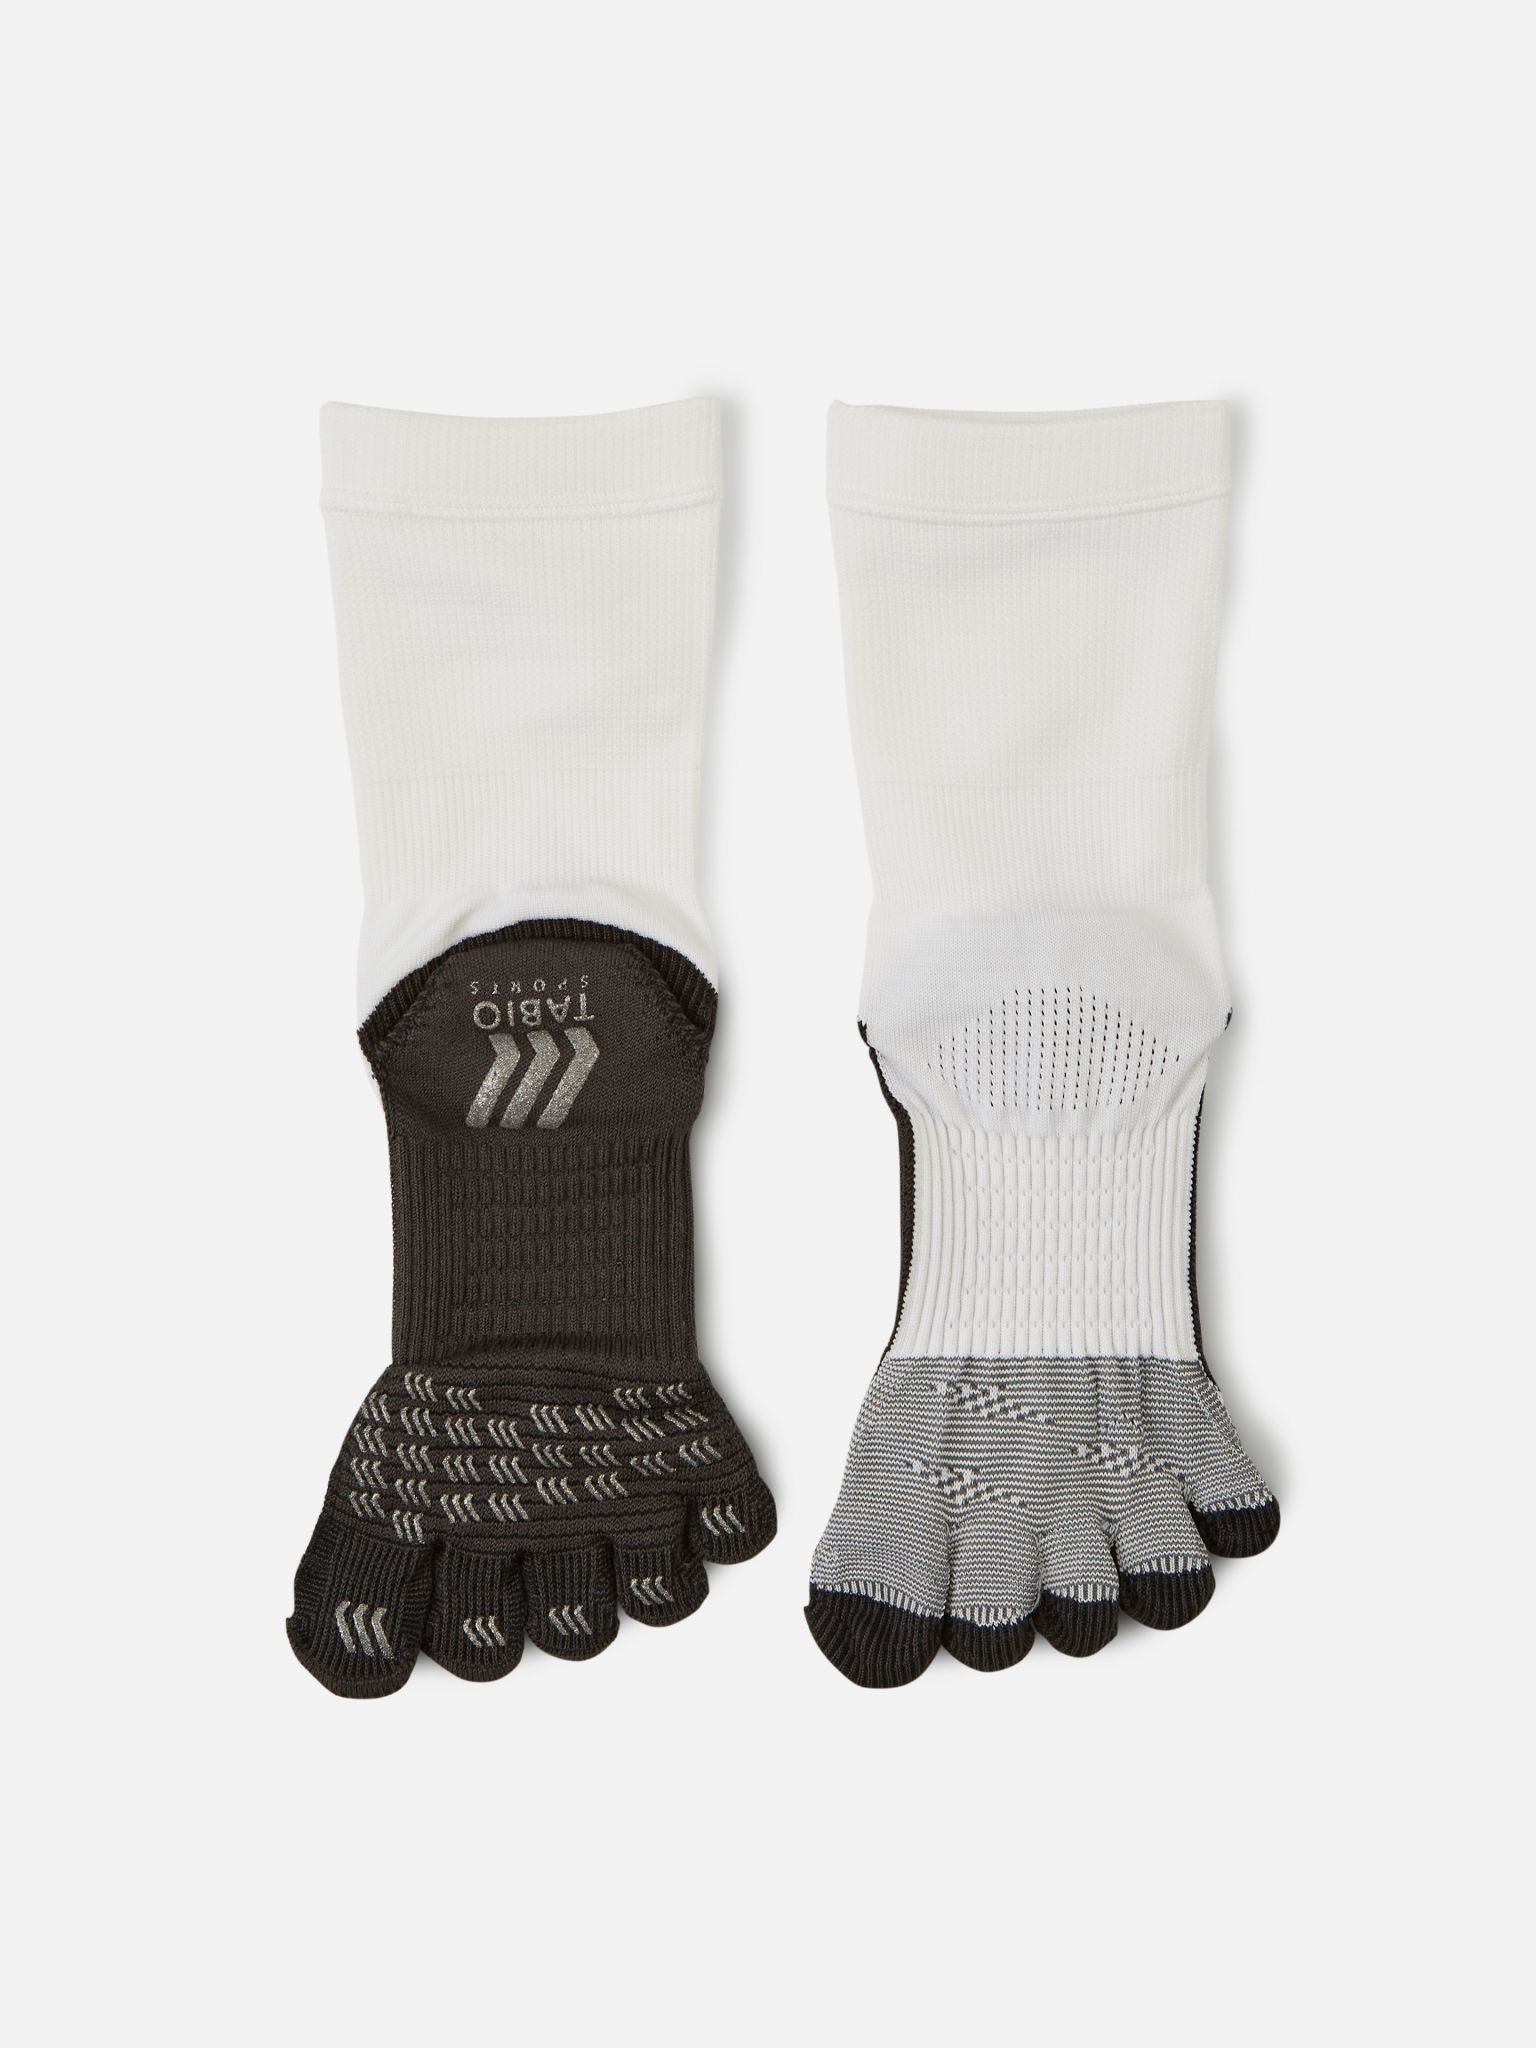 Tabio Sports Five Finger Grip Socks Review – Lockhart Boot Blog